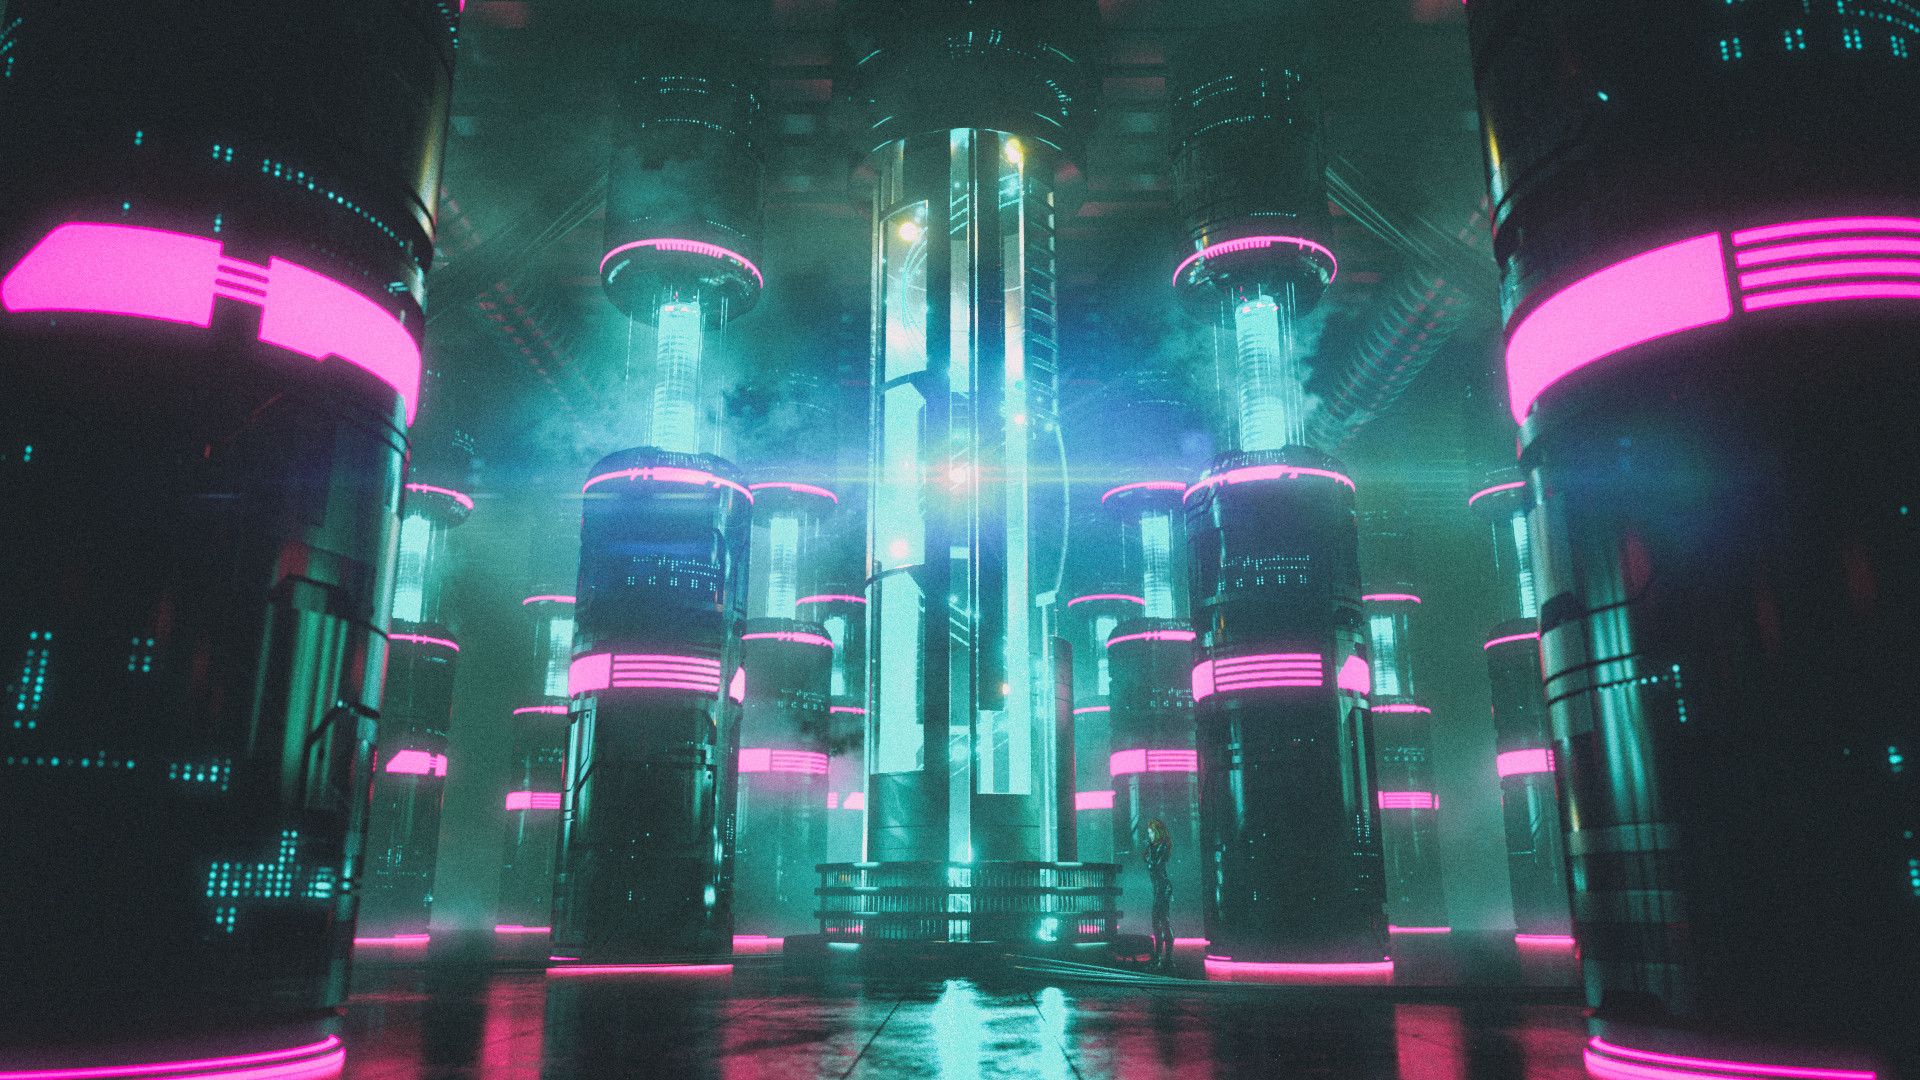 General 1920x1080 David Legnon cyberpunk engine room pillar neon pink blue smoke science fiction cyan